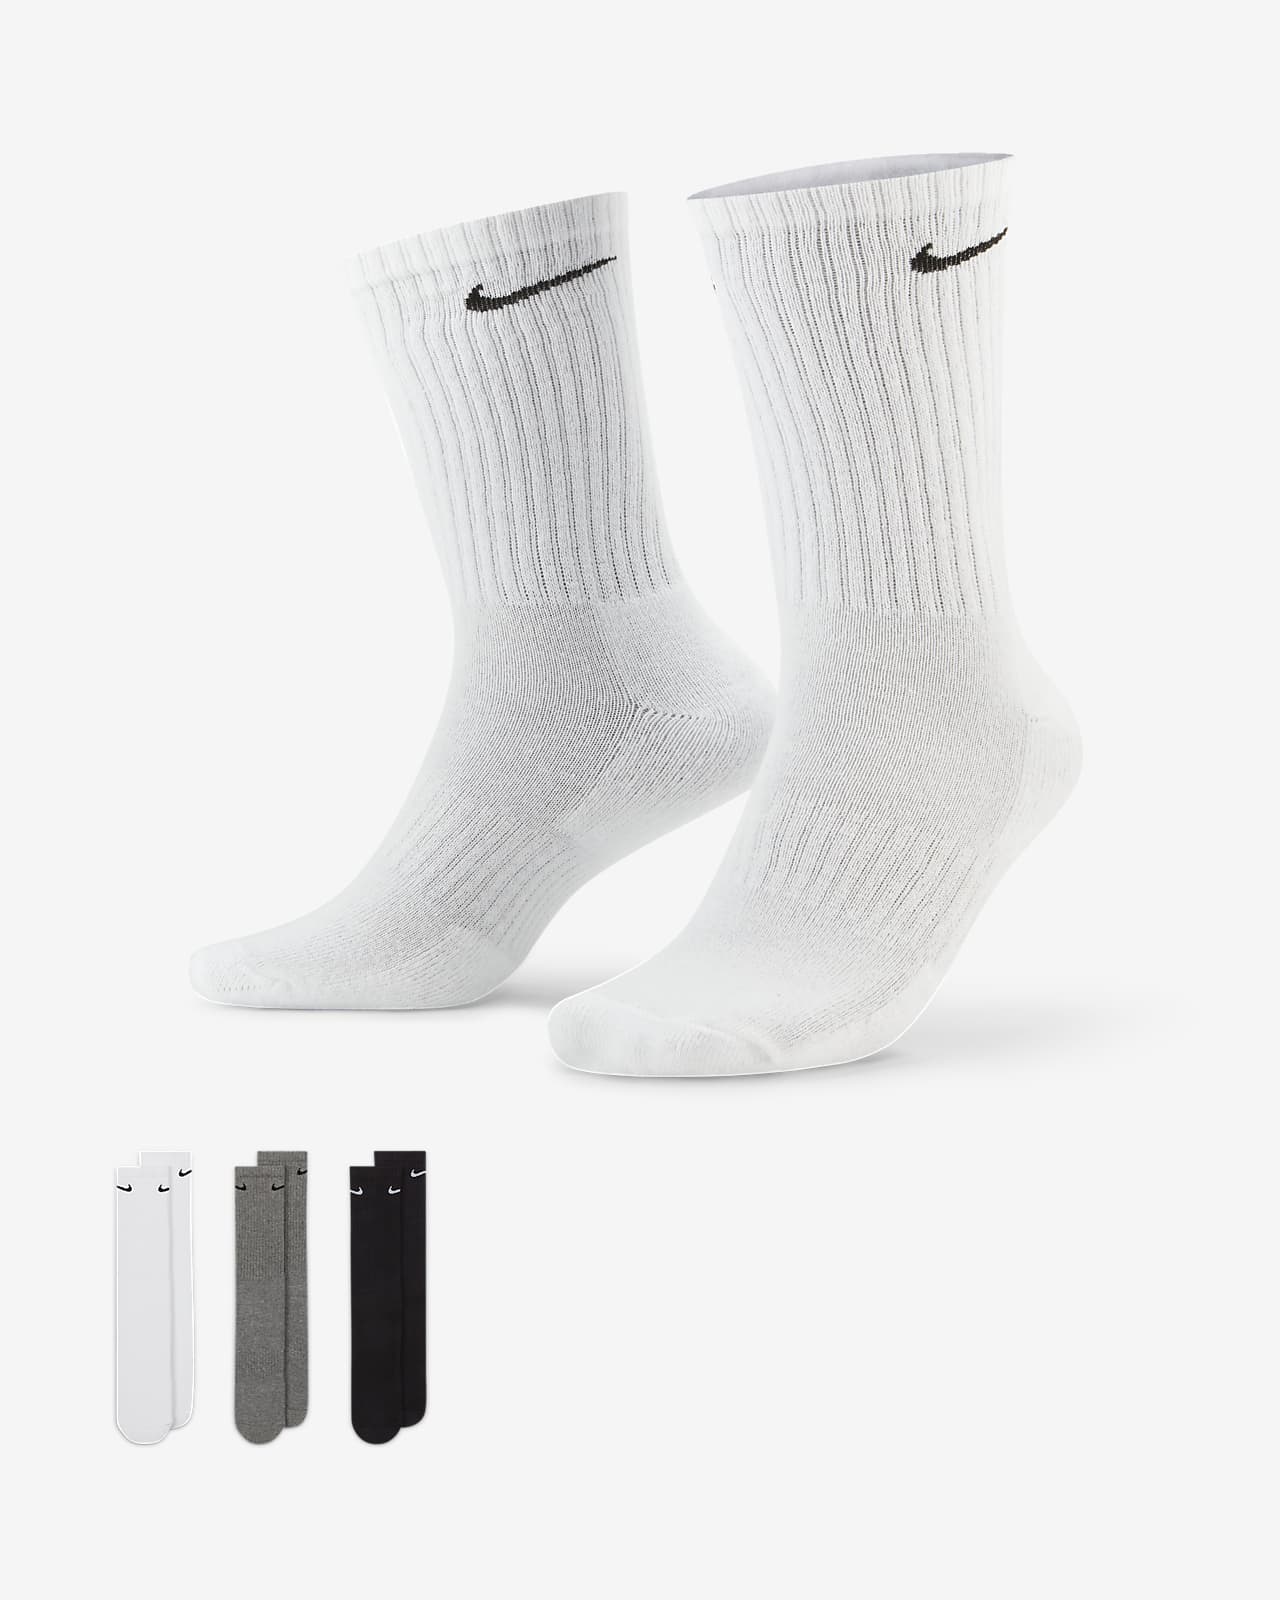 Nike socks stockings  Nike socks outfit, Black nike socks, Black